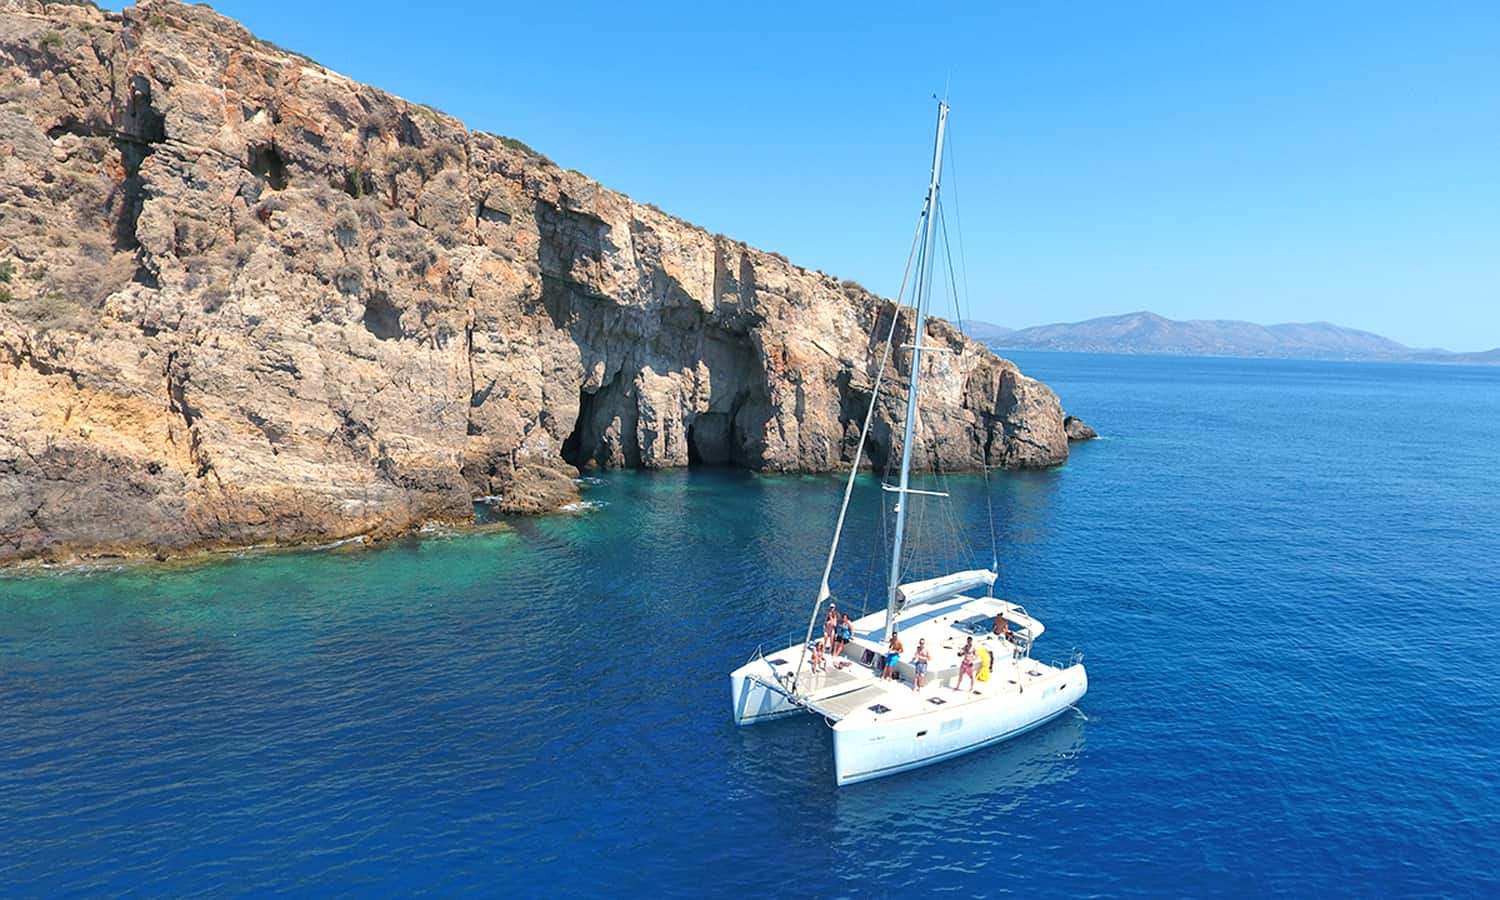 Athens Private Tours with a catamaran cruise along the aegean coast